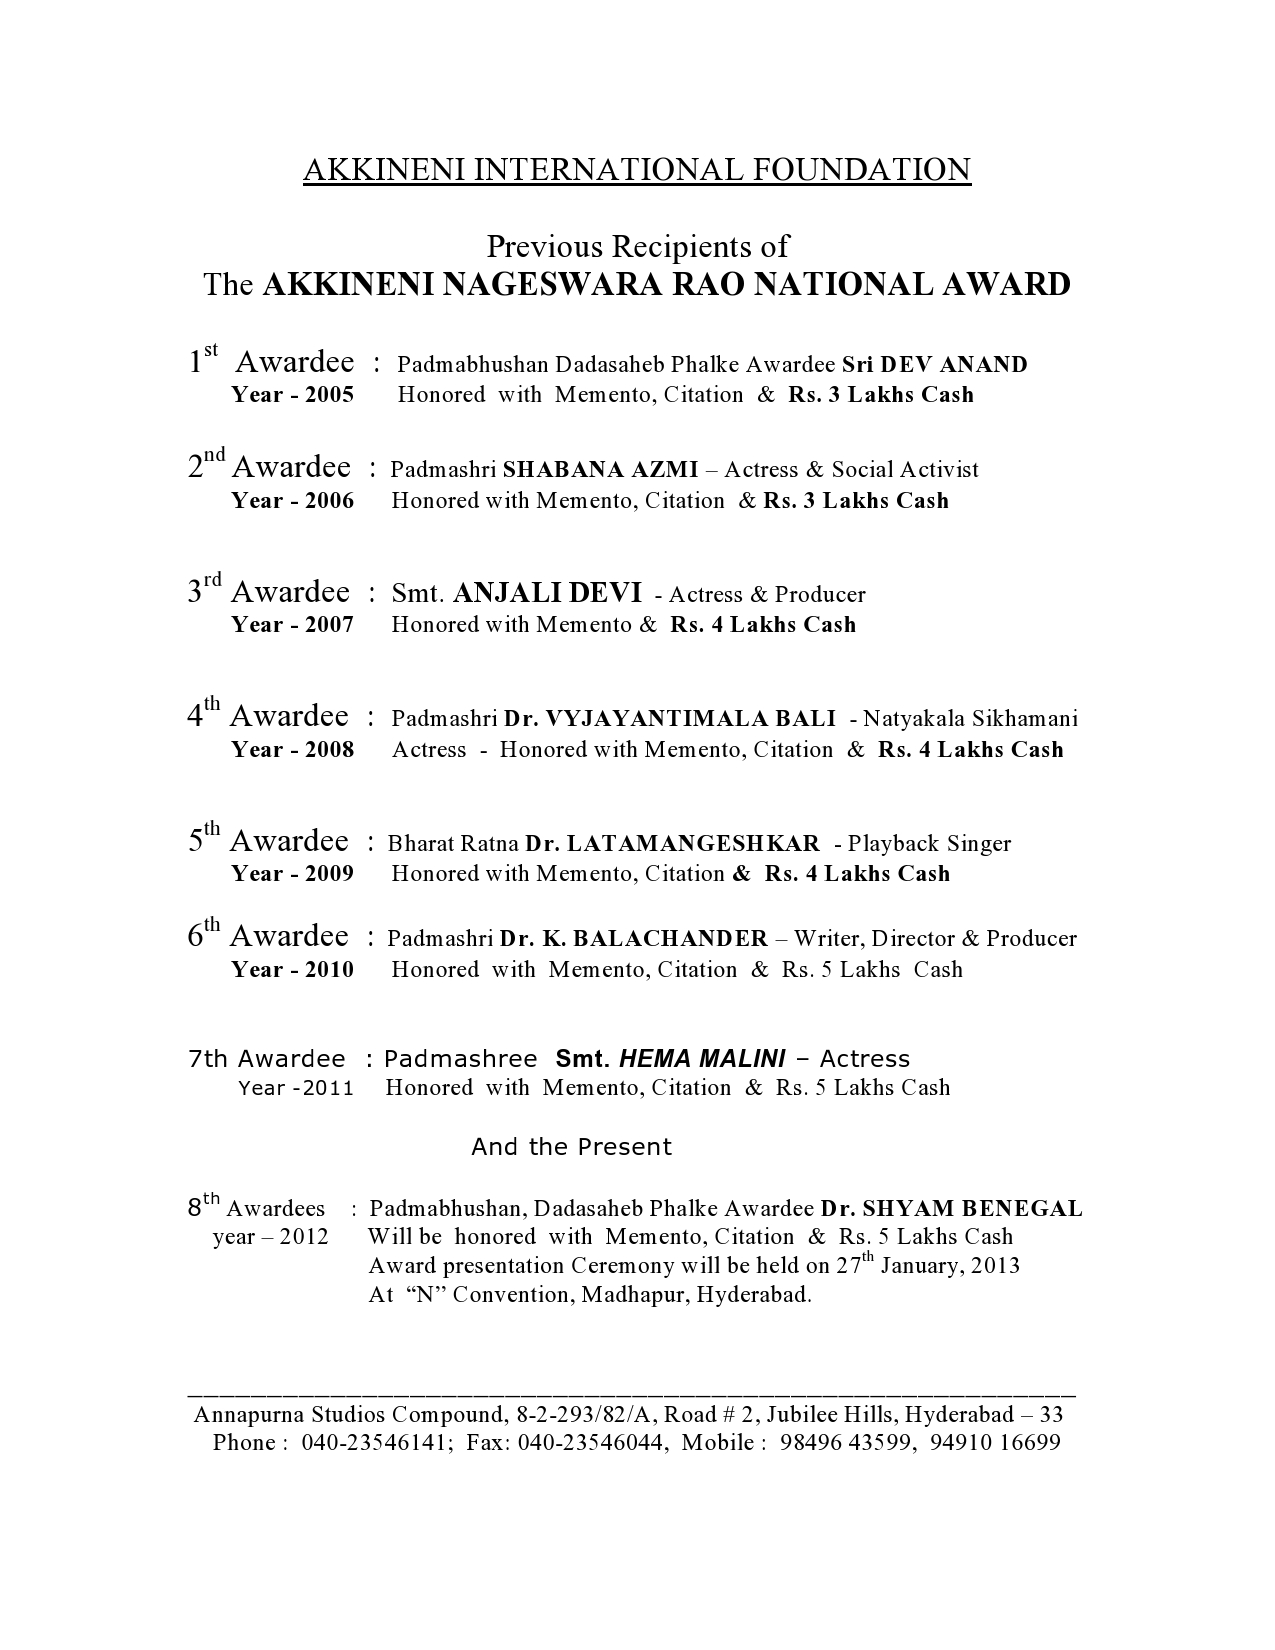 ANR Award recipients